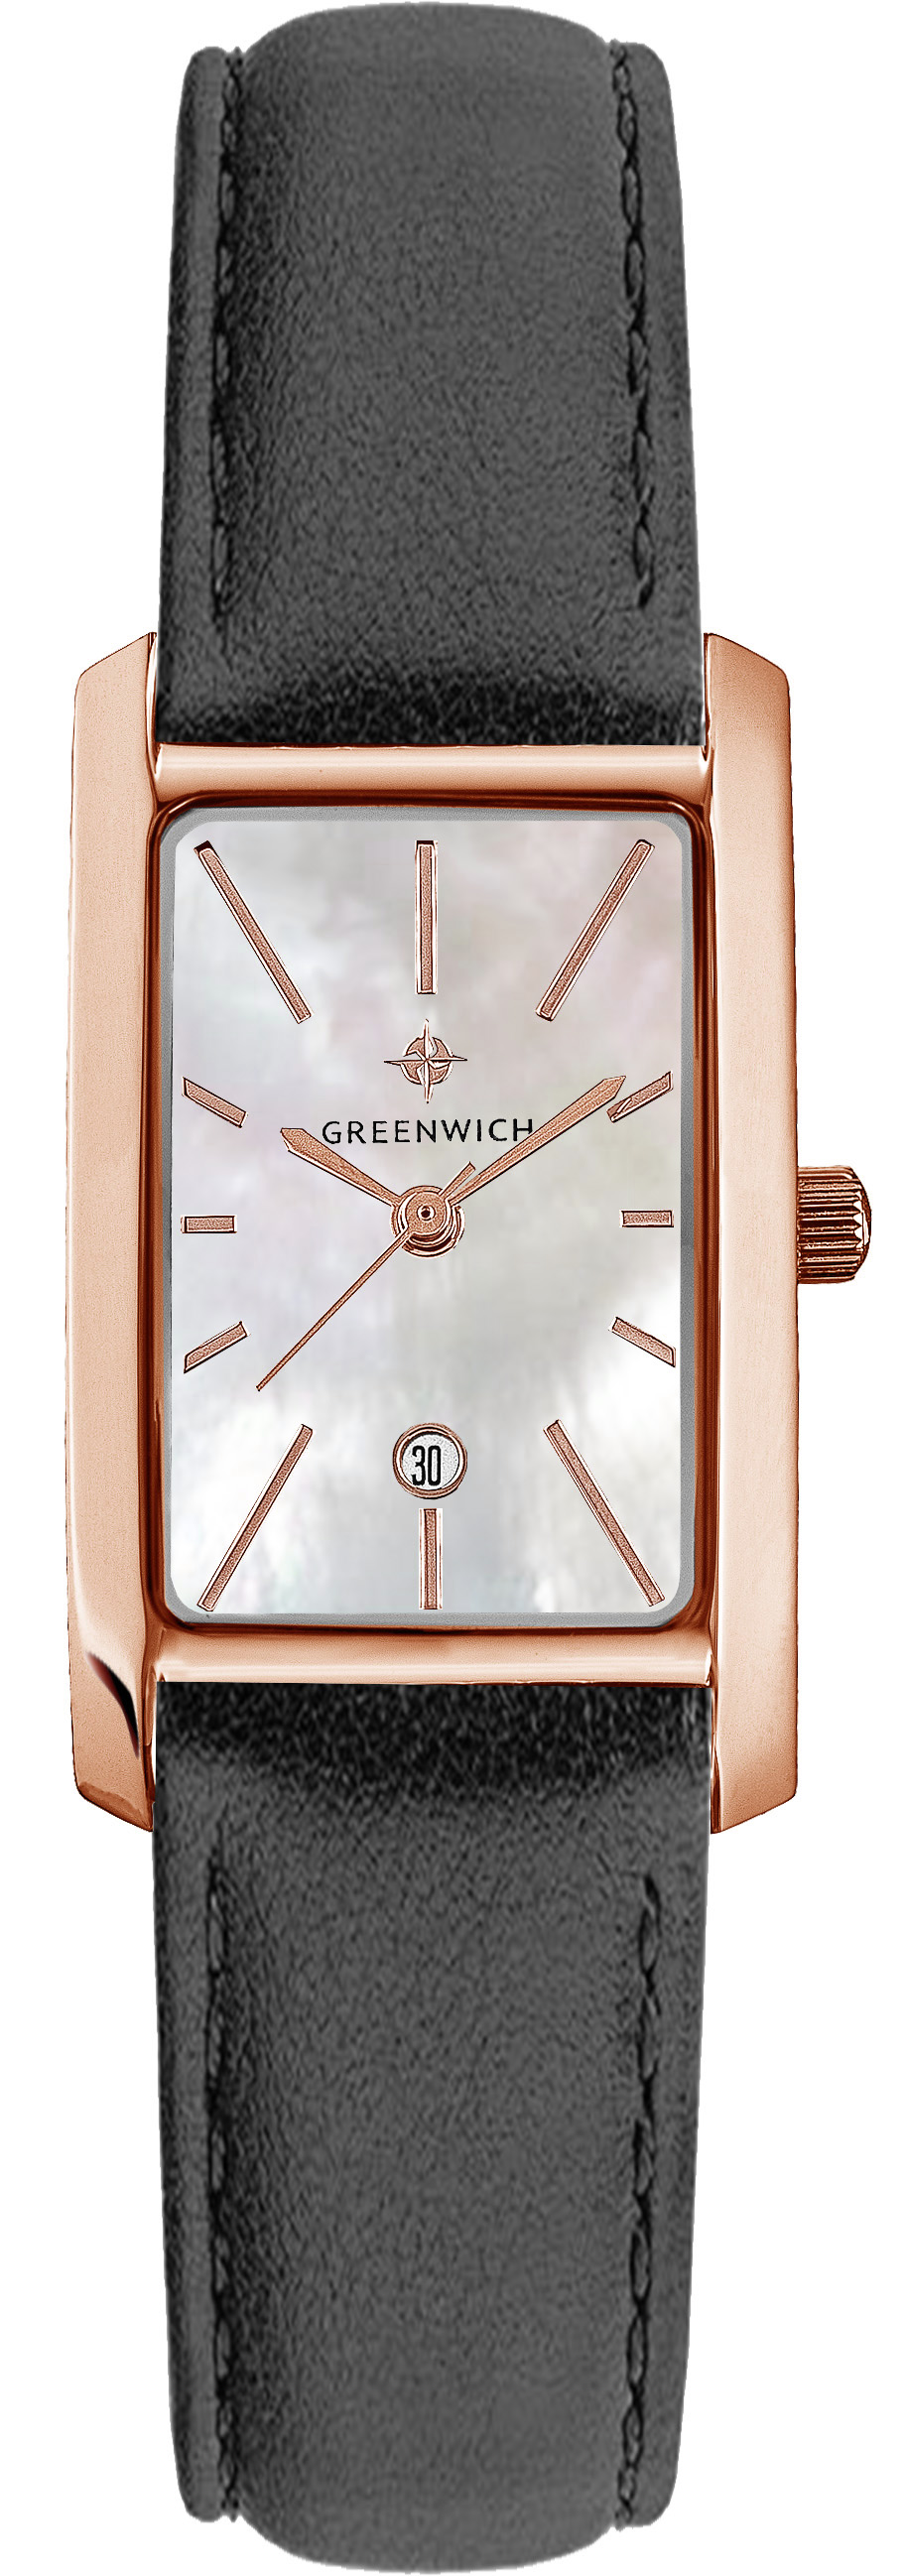 GW 511.41.13, женские часы Greenwich Vesta